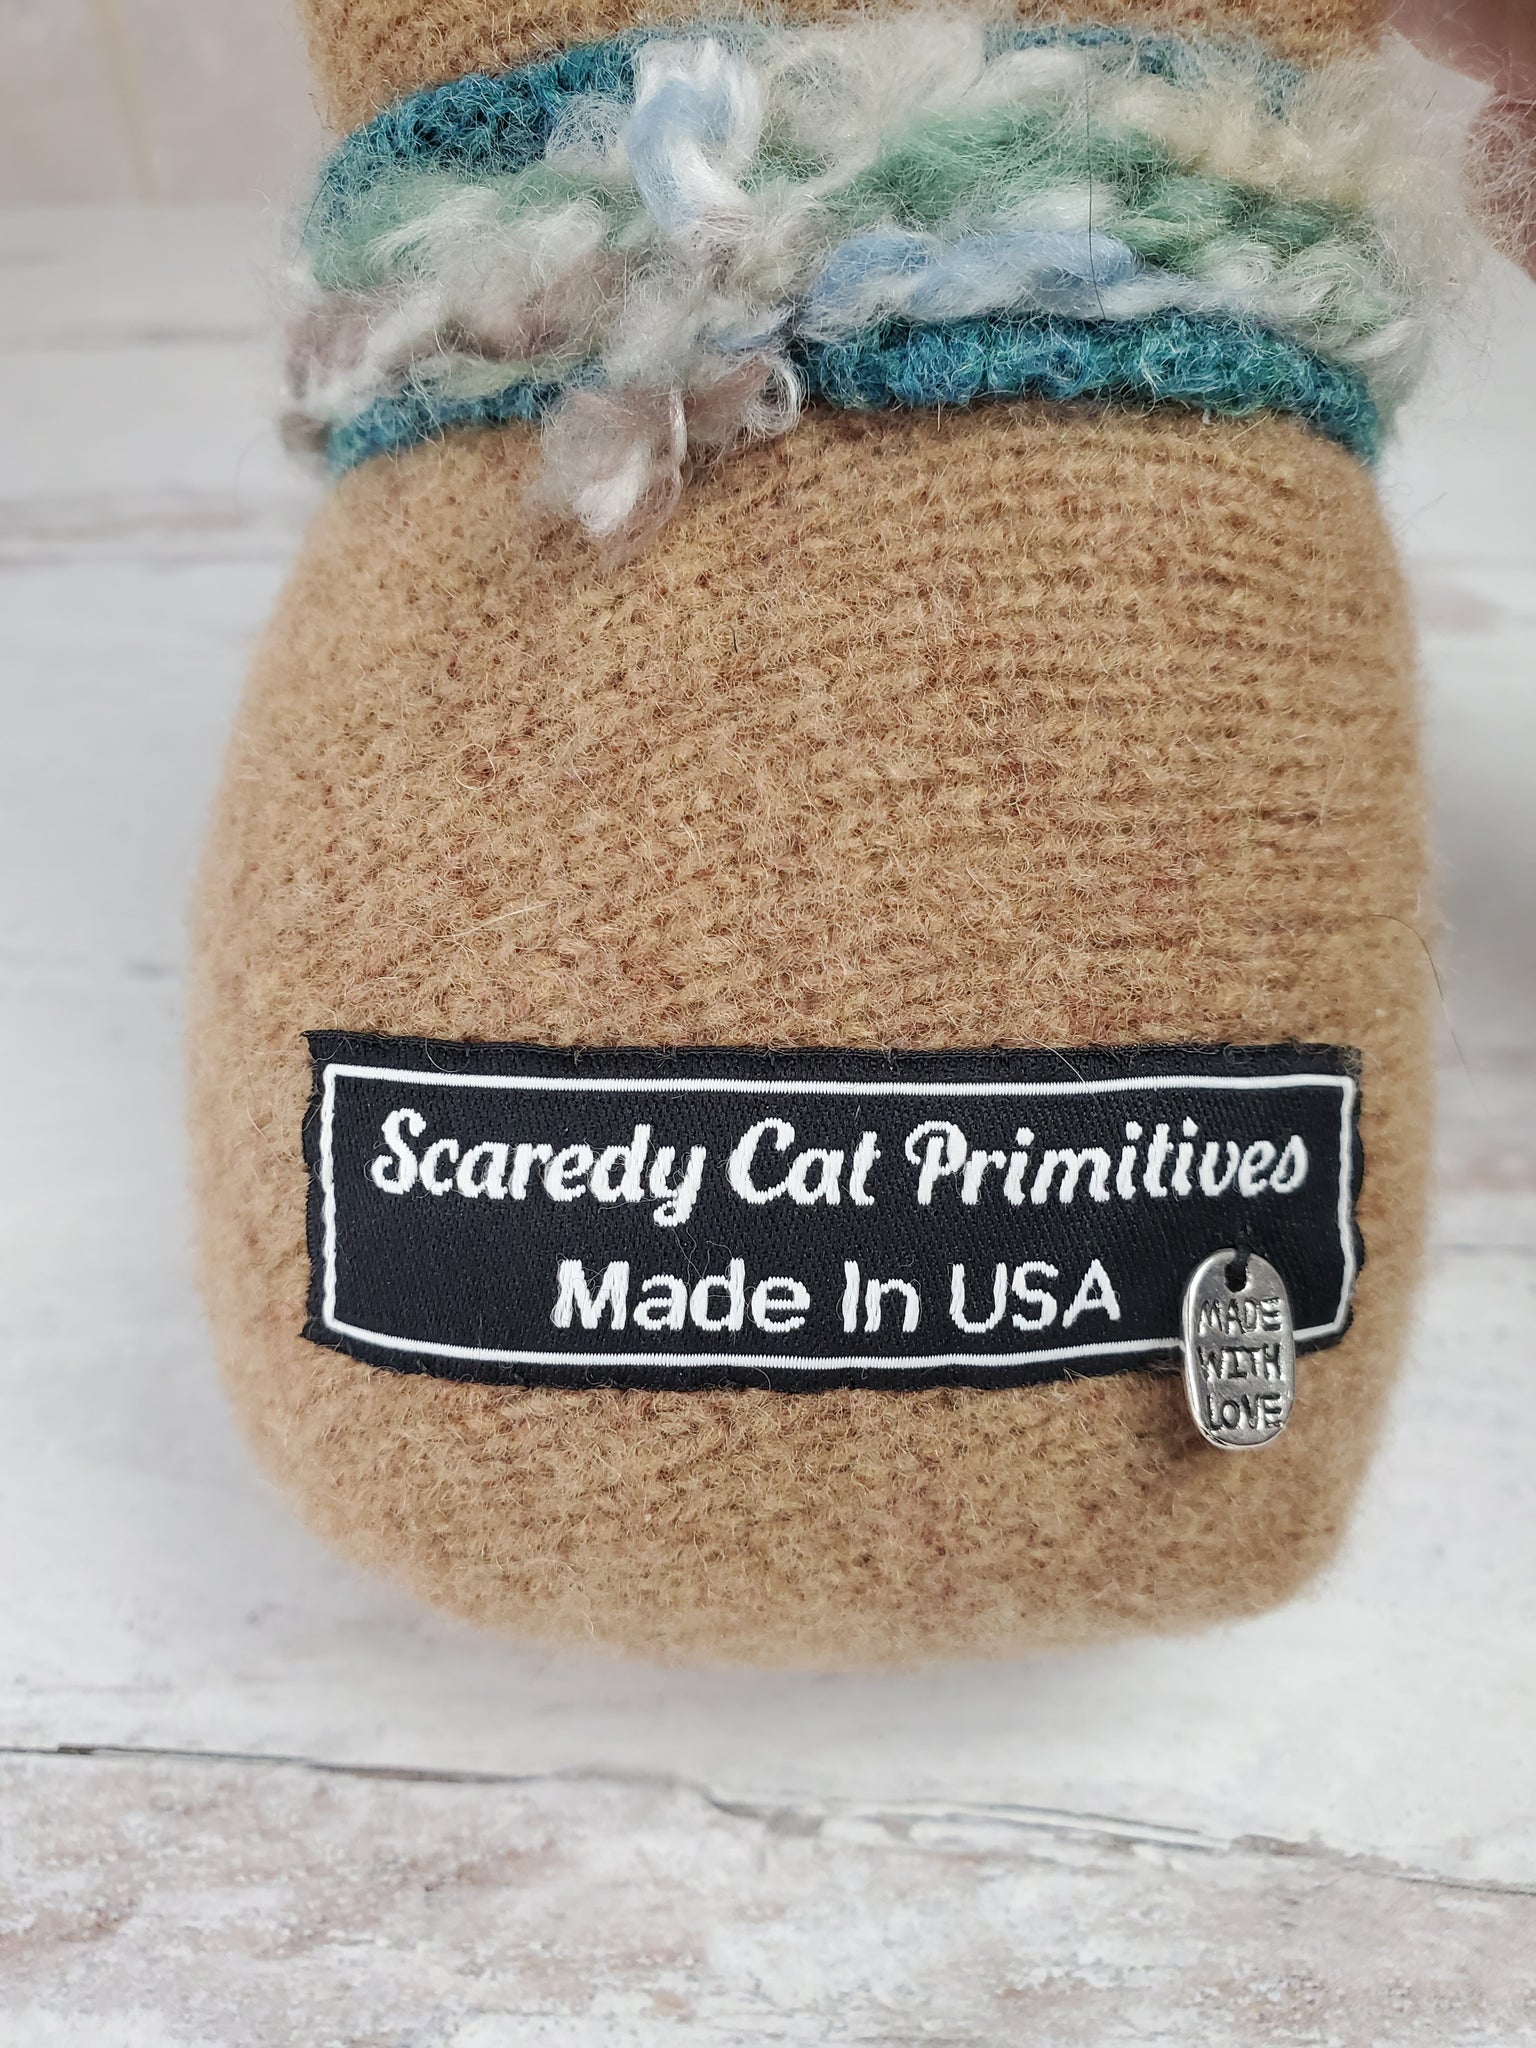 Scaredy Cat Primitives